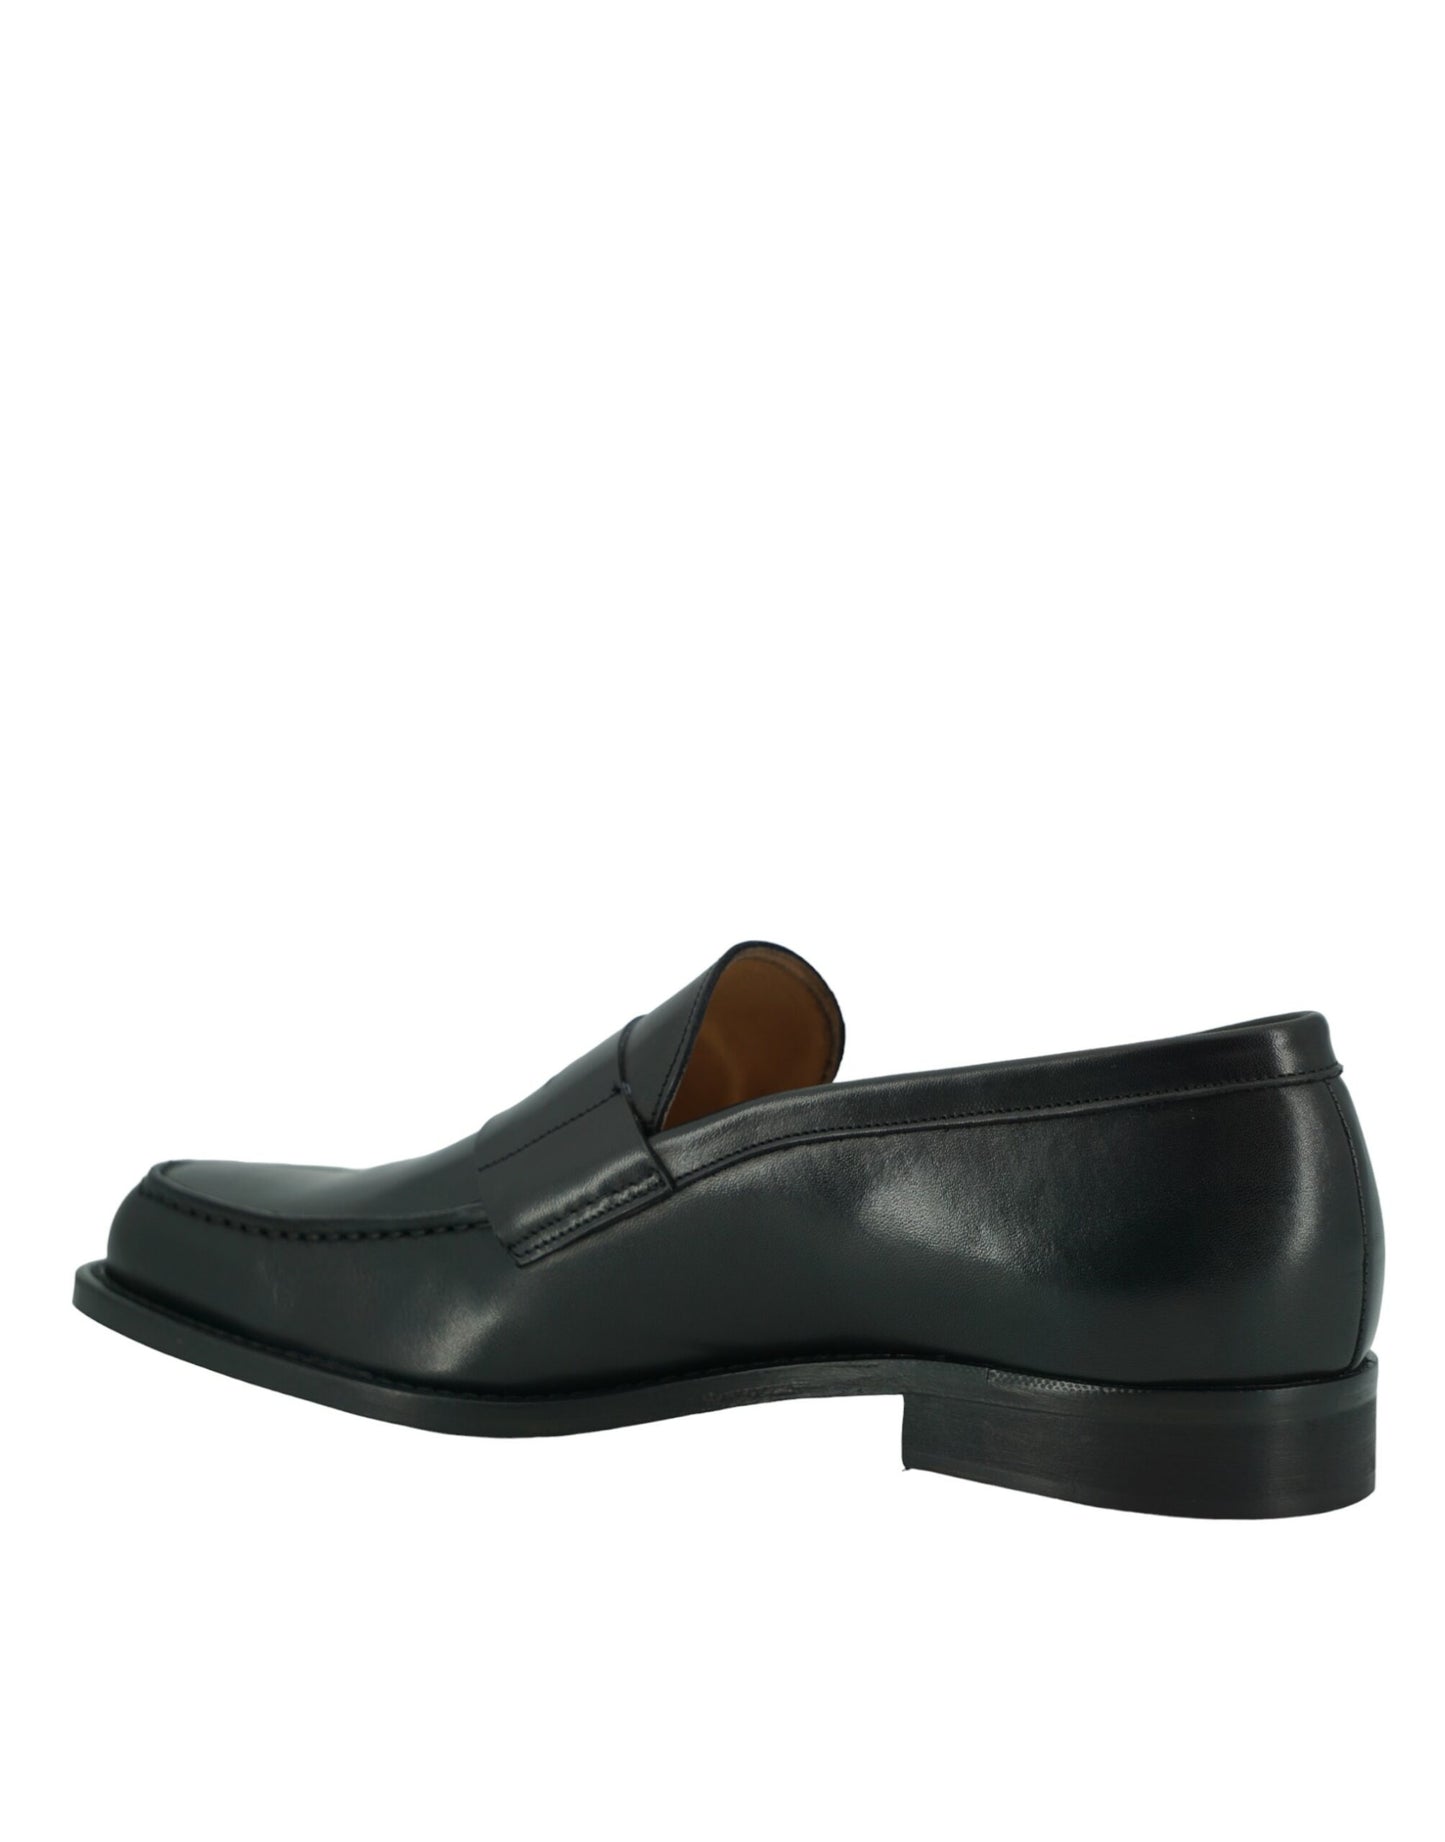 Saxone of Scotland Elegant Black Calf Leather Loafers for Men